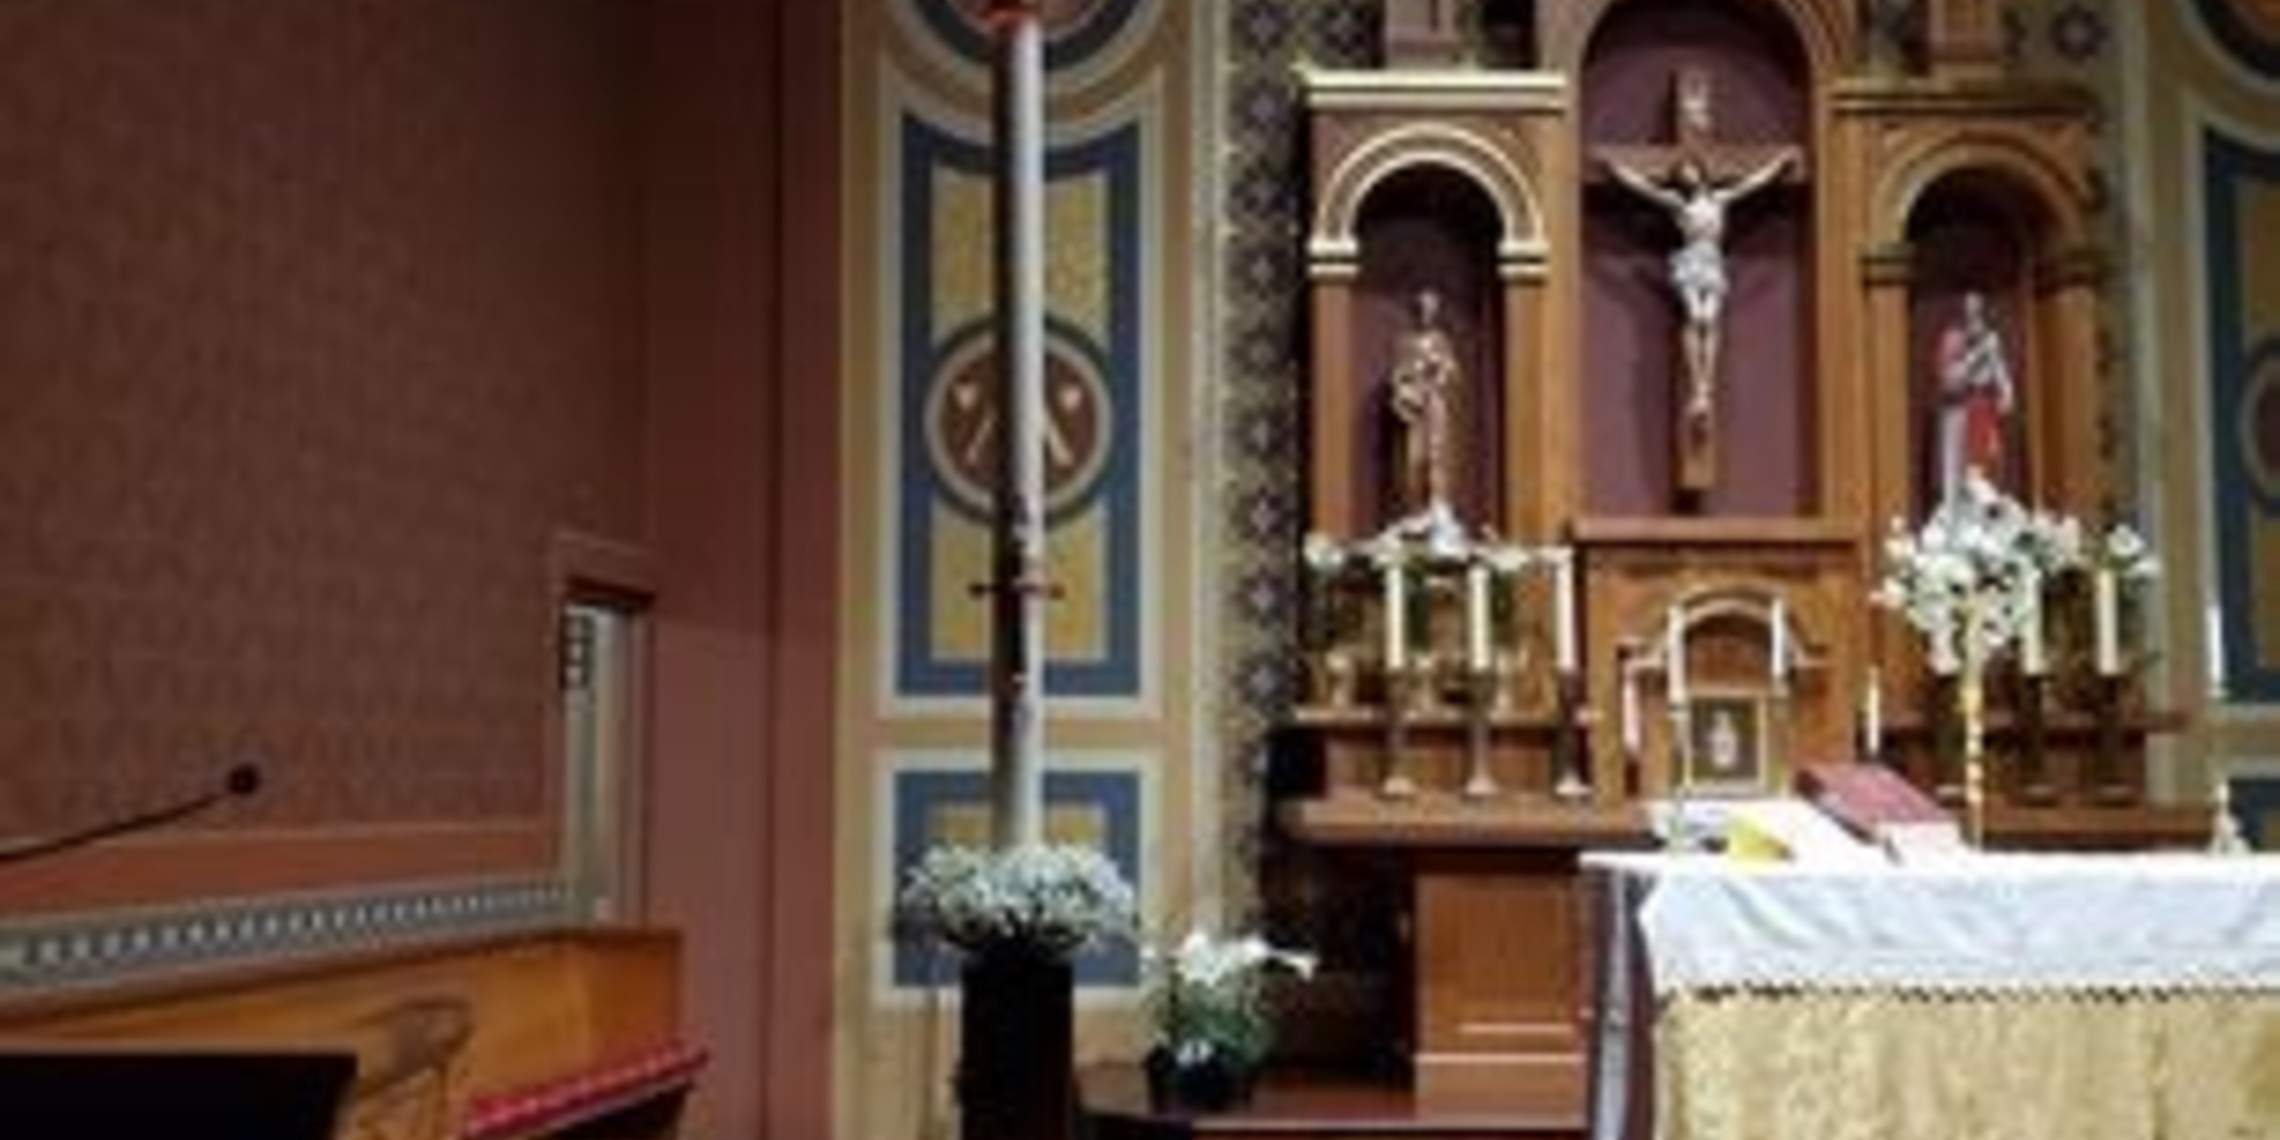 St Thomas More Altar